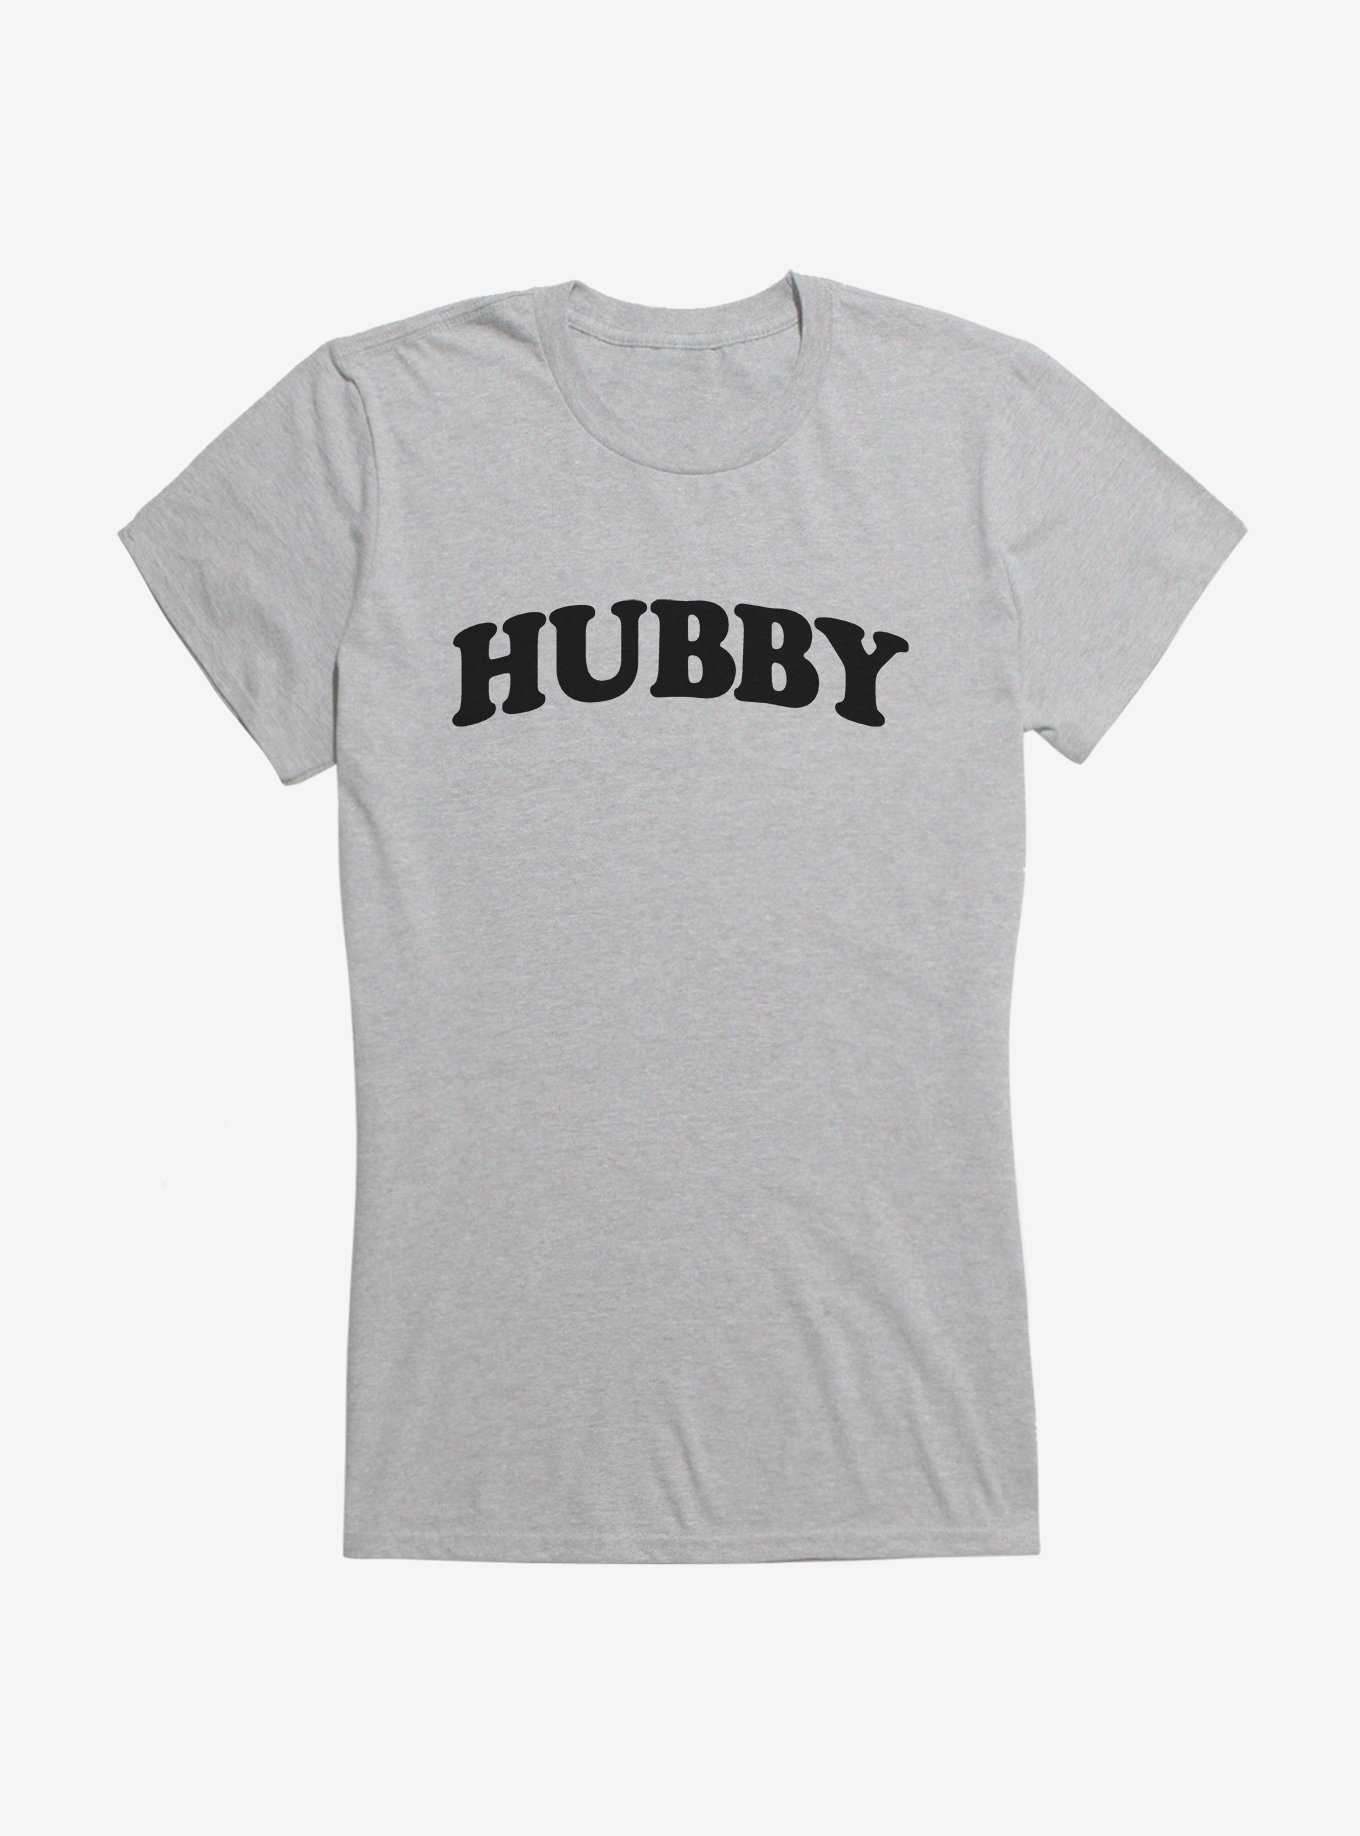 Hot Topic Hubby Girls T-Shirt, , hi-res